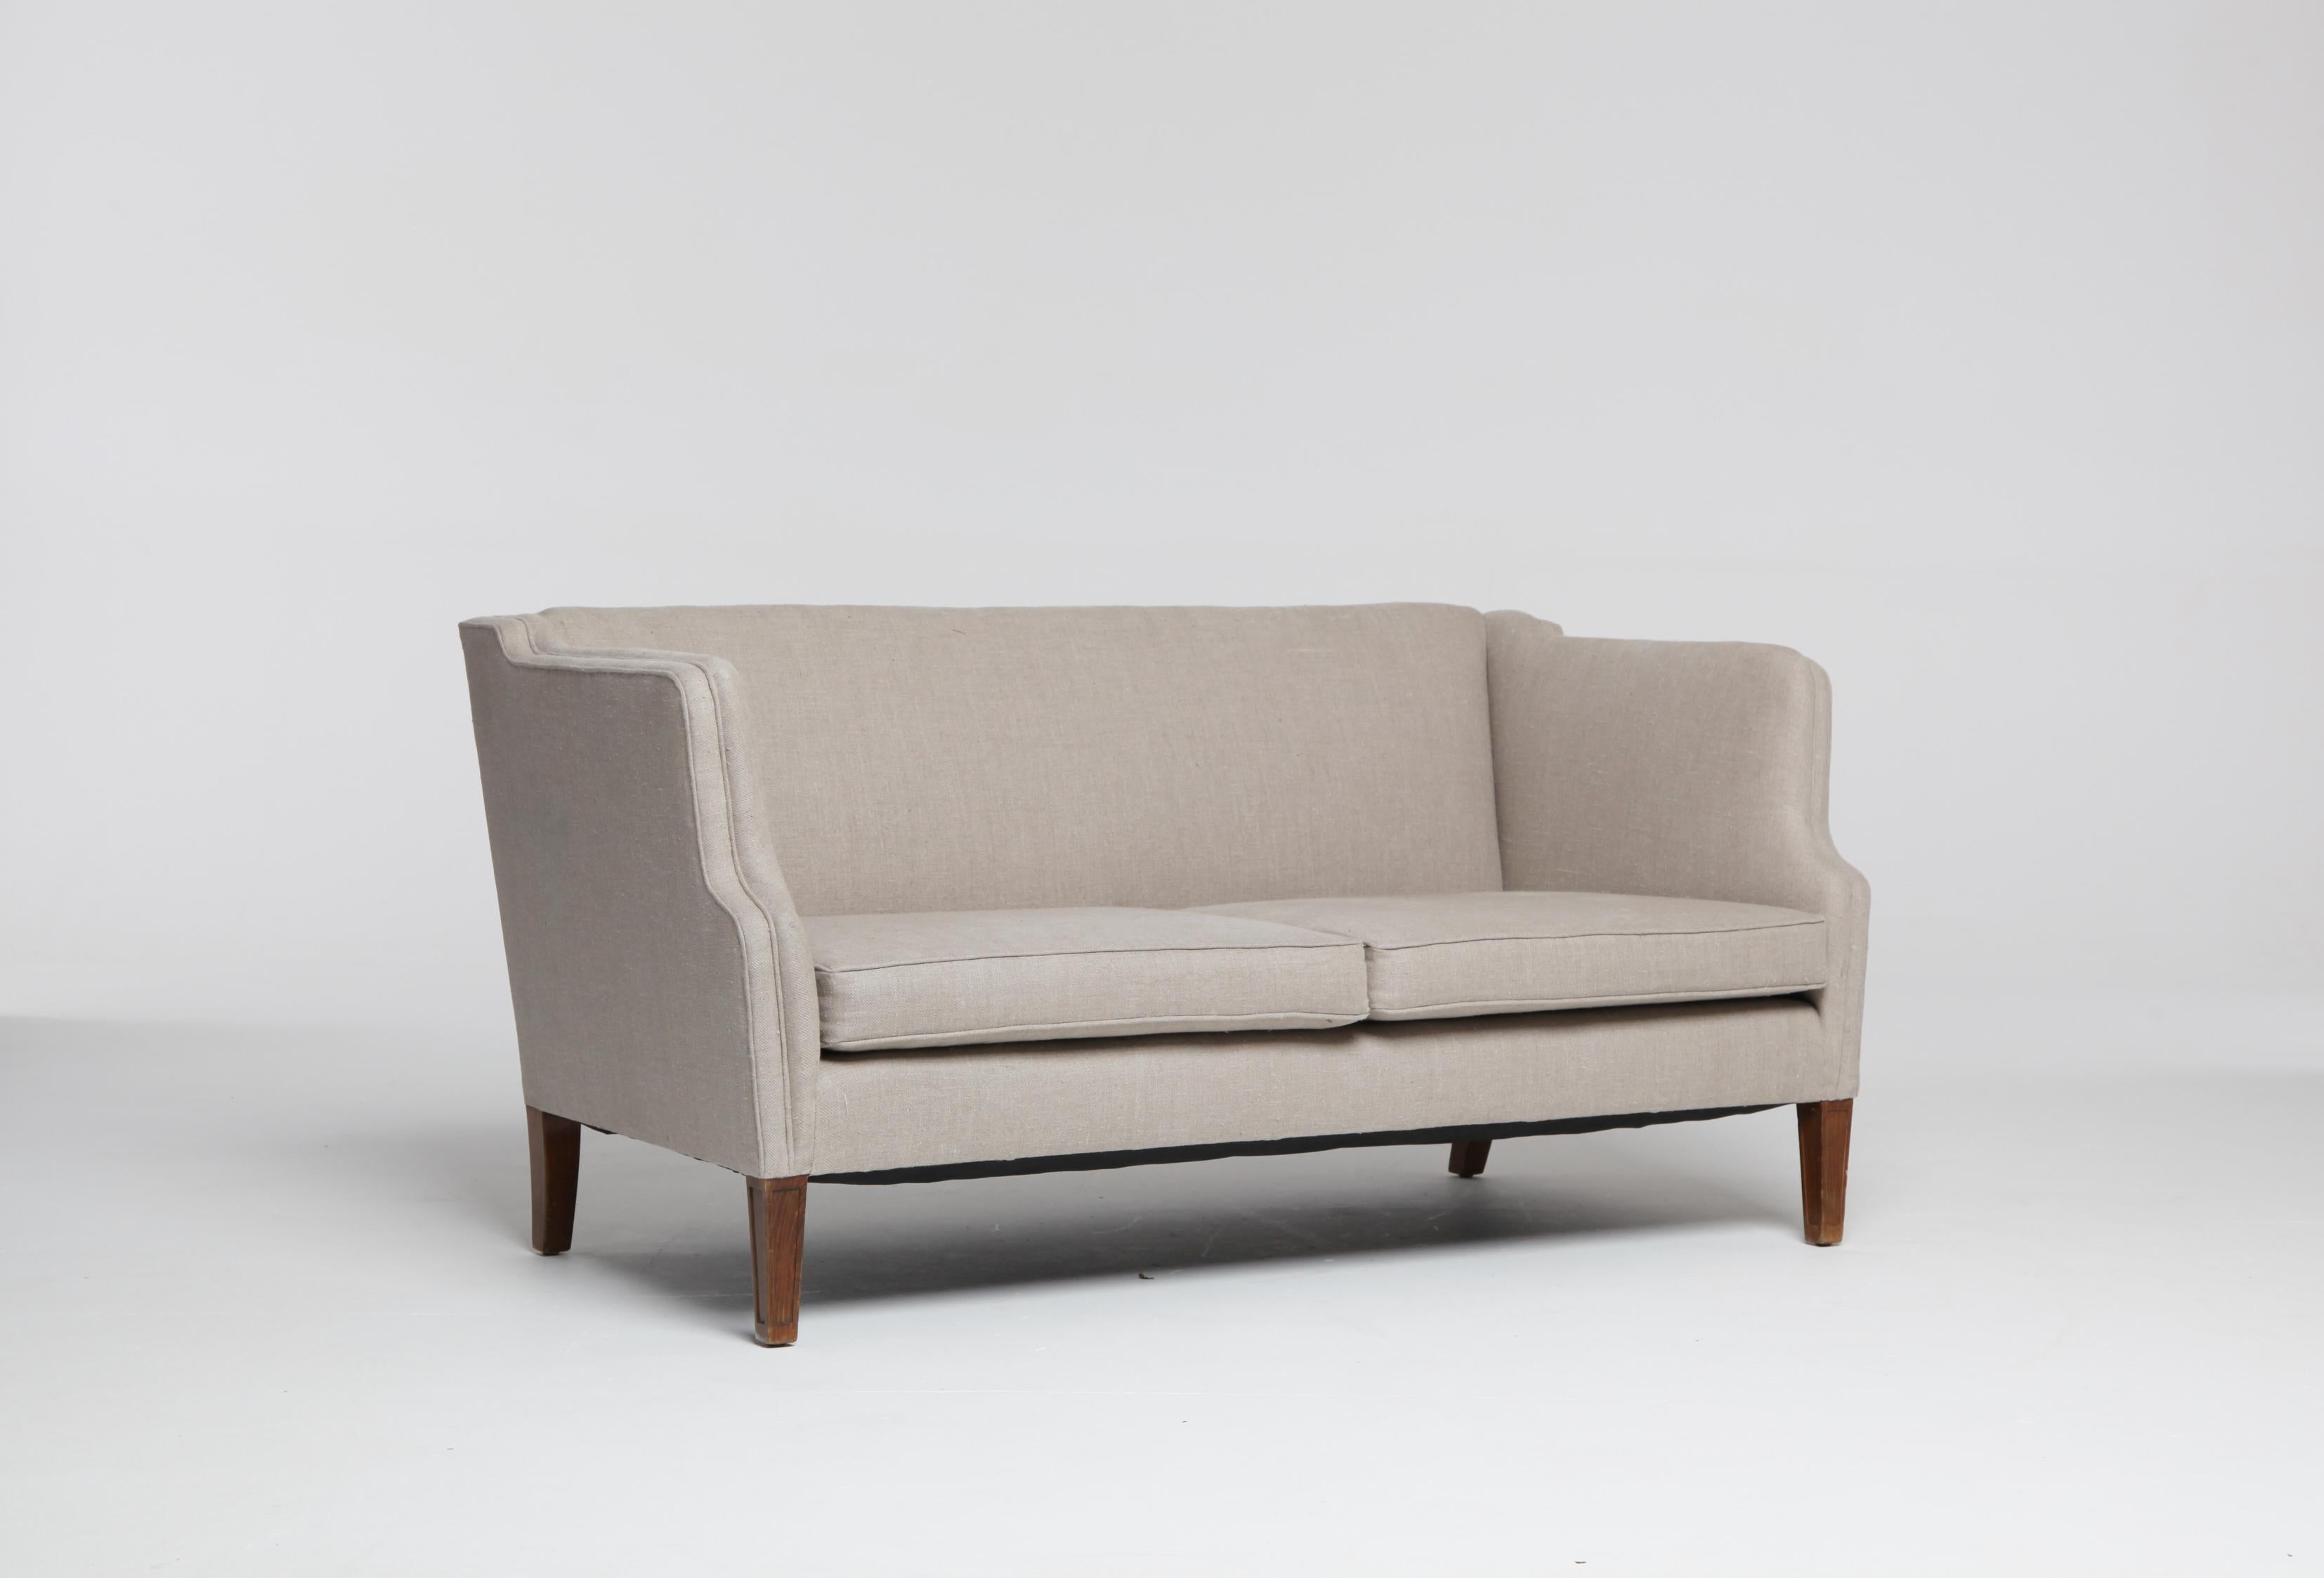 Danish Elegant Two-Seater Box Sofa in Natural Linen, Denmark 1940s/1950s